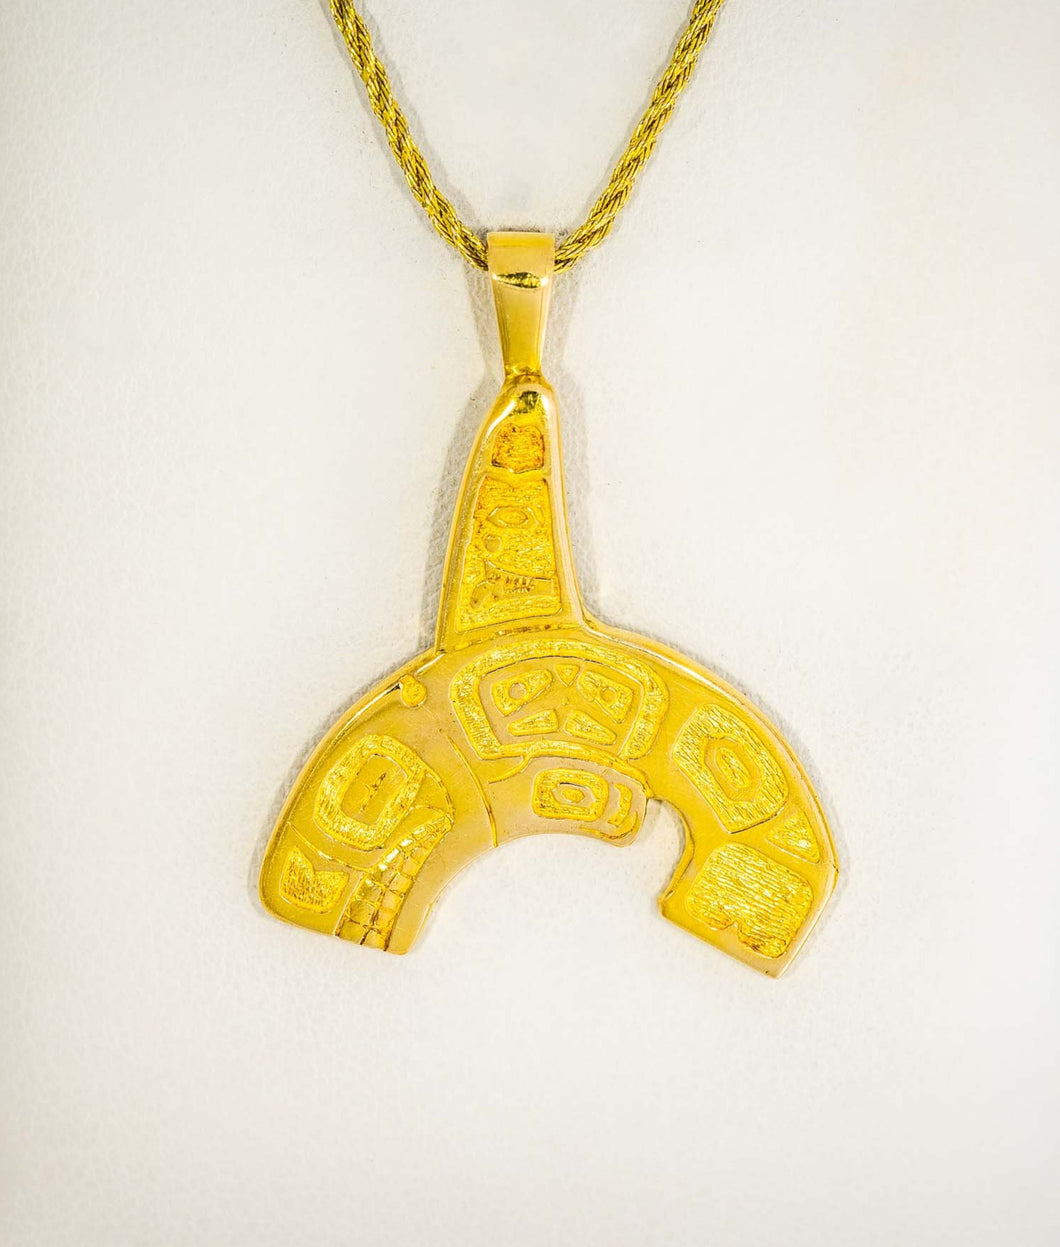 Gold Totemic Orca Pendant by Paul Iwanaga